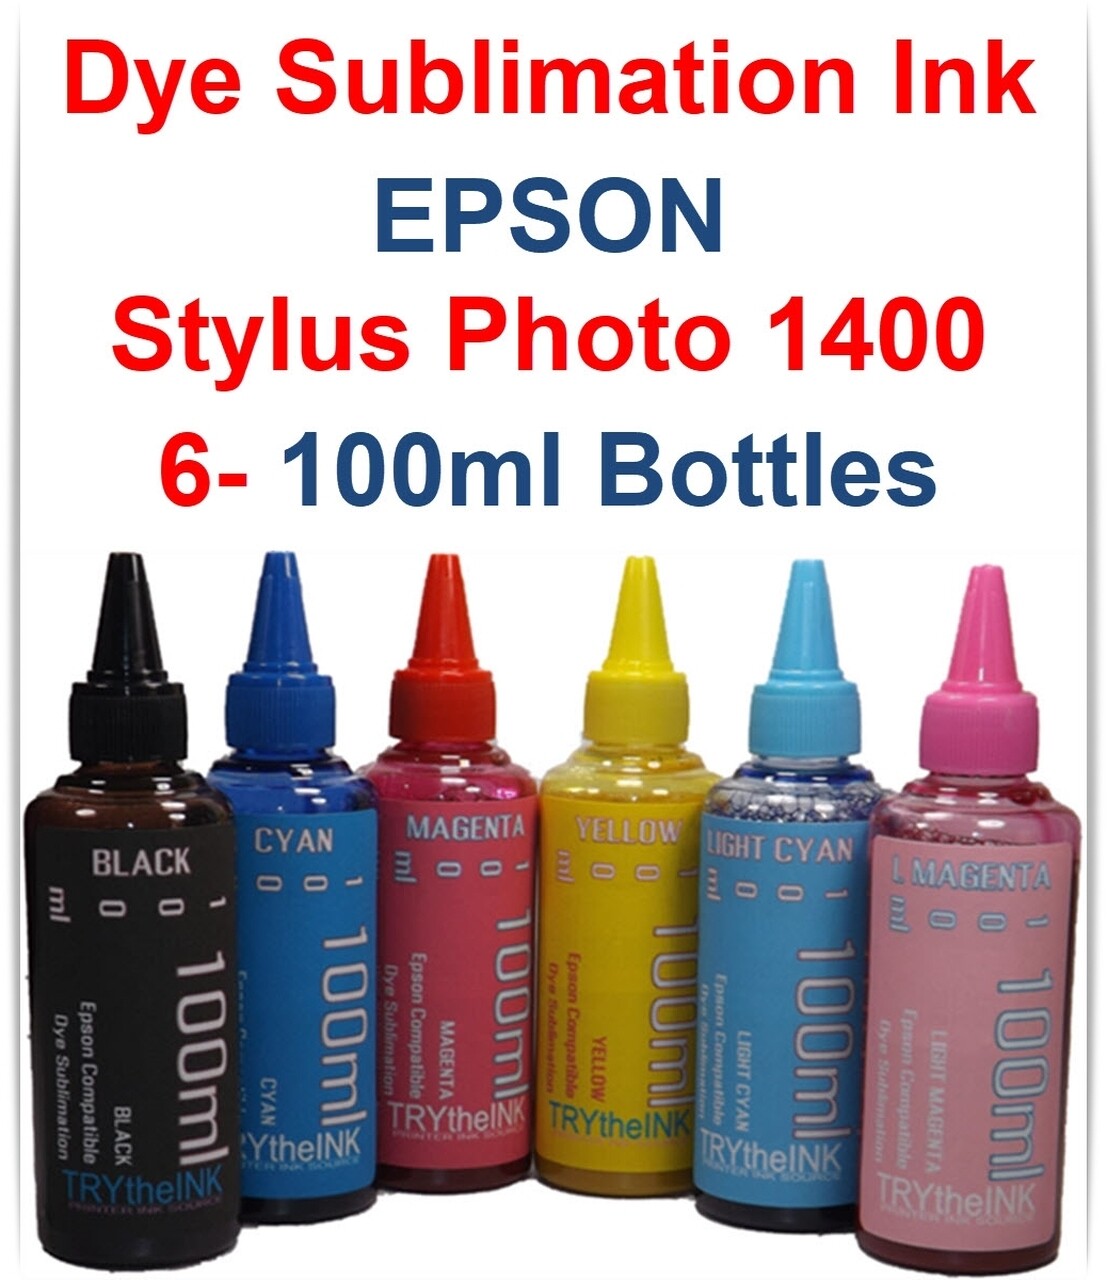 6- Dye Sublimation Ink 100ml bottles for Epson Stylus Photo 1400 Printer